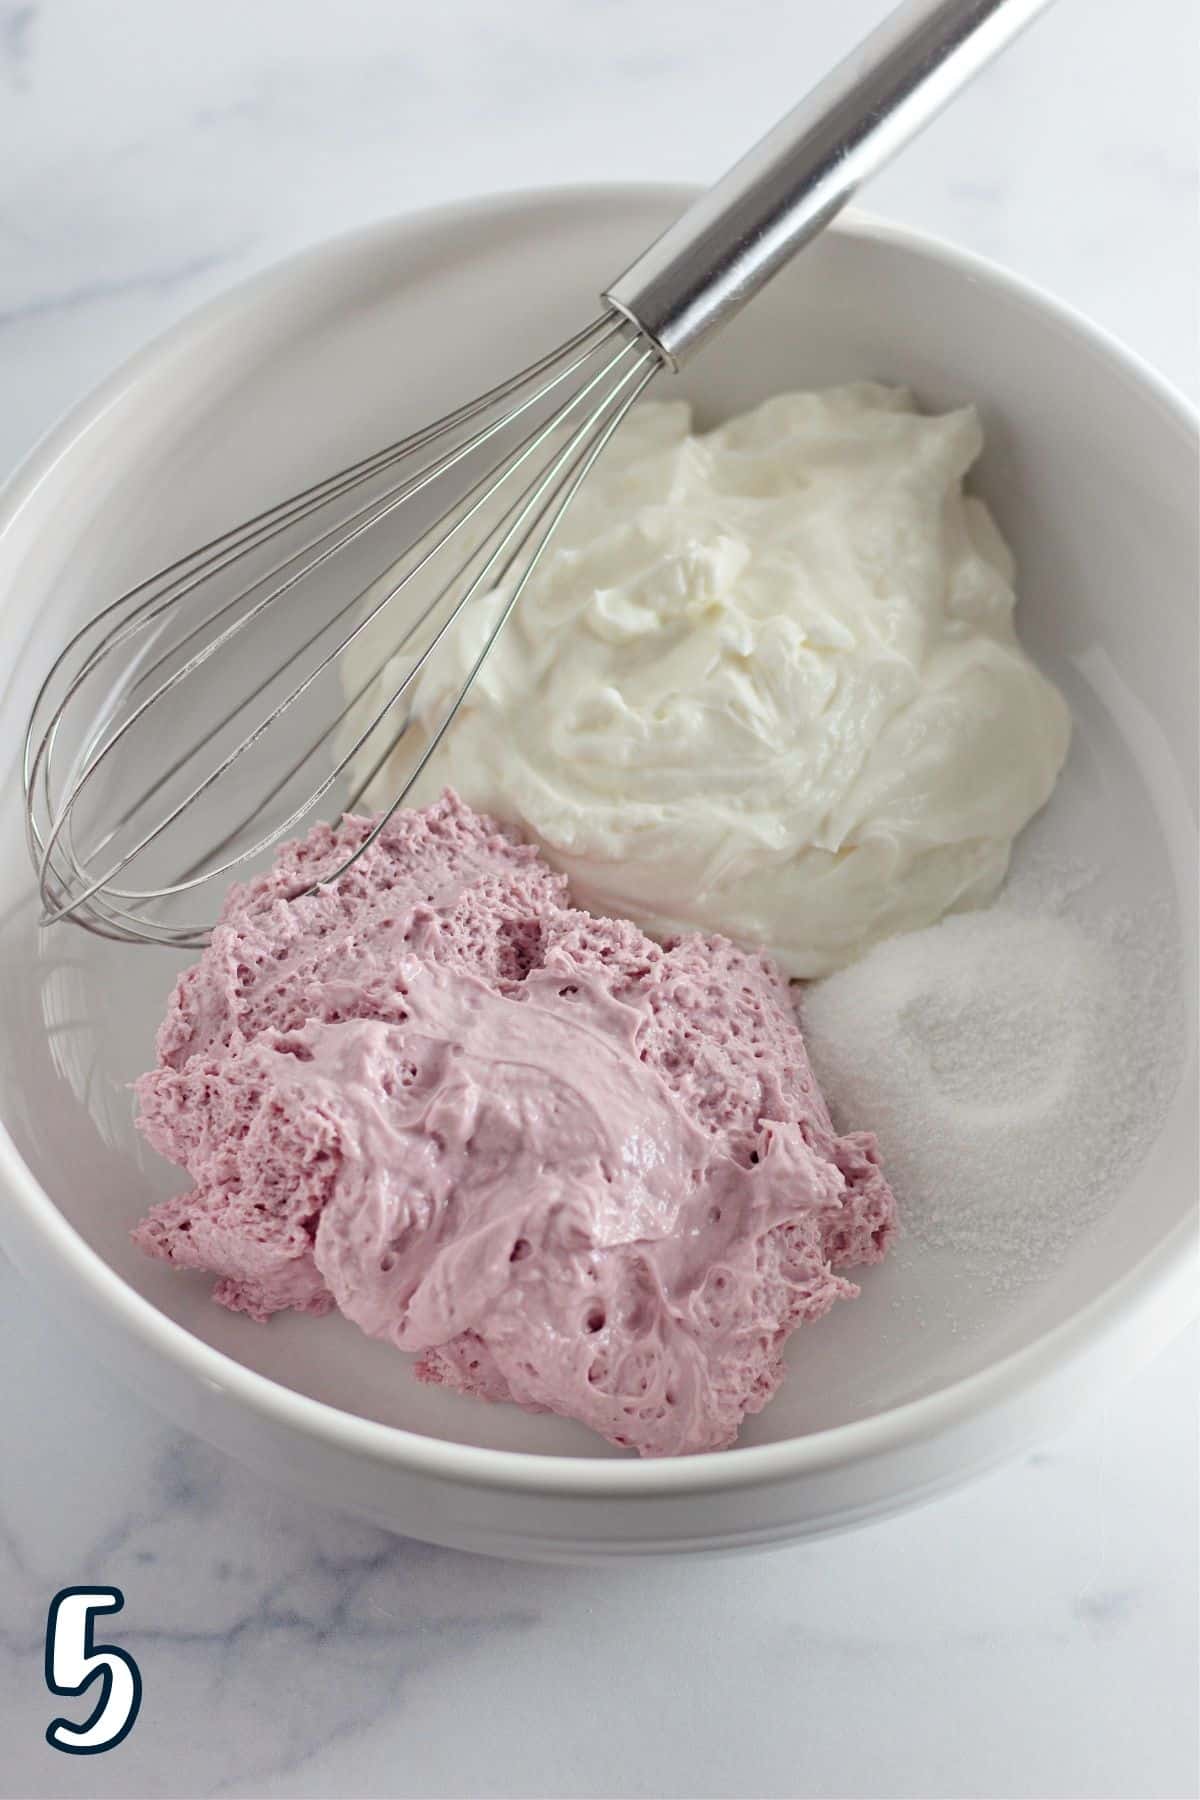 Flavored whipped cream cheese, sugar, and Greek yogurt in a white bowl. 